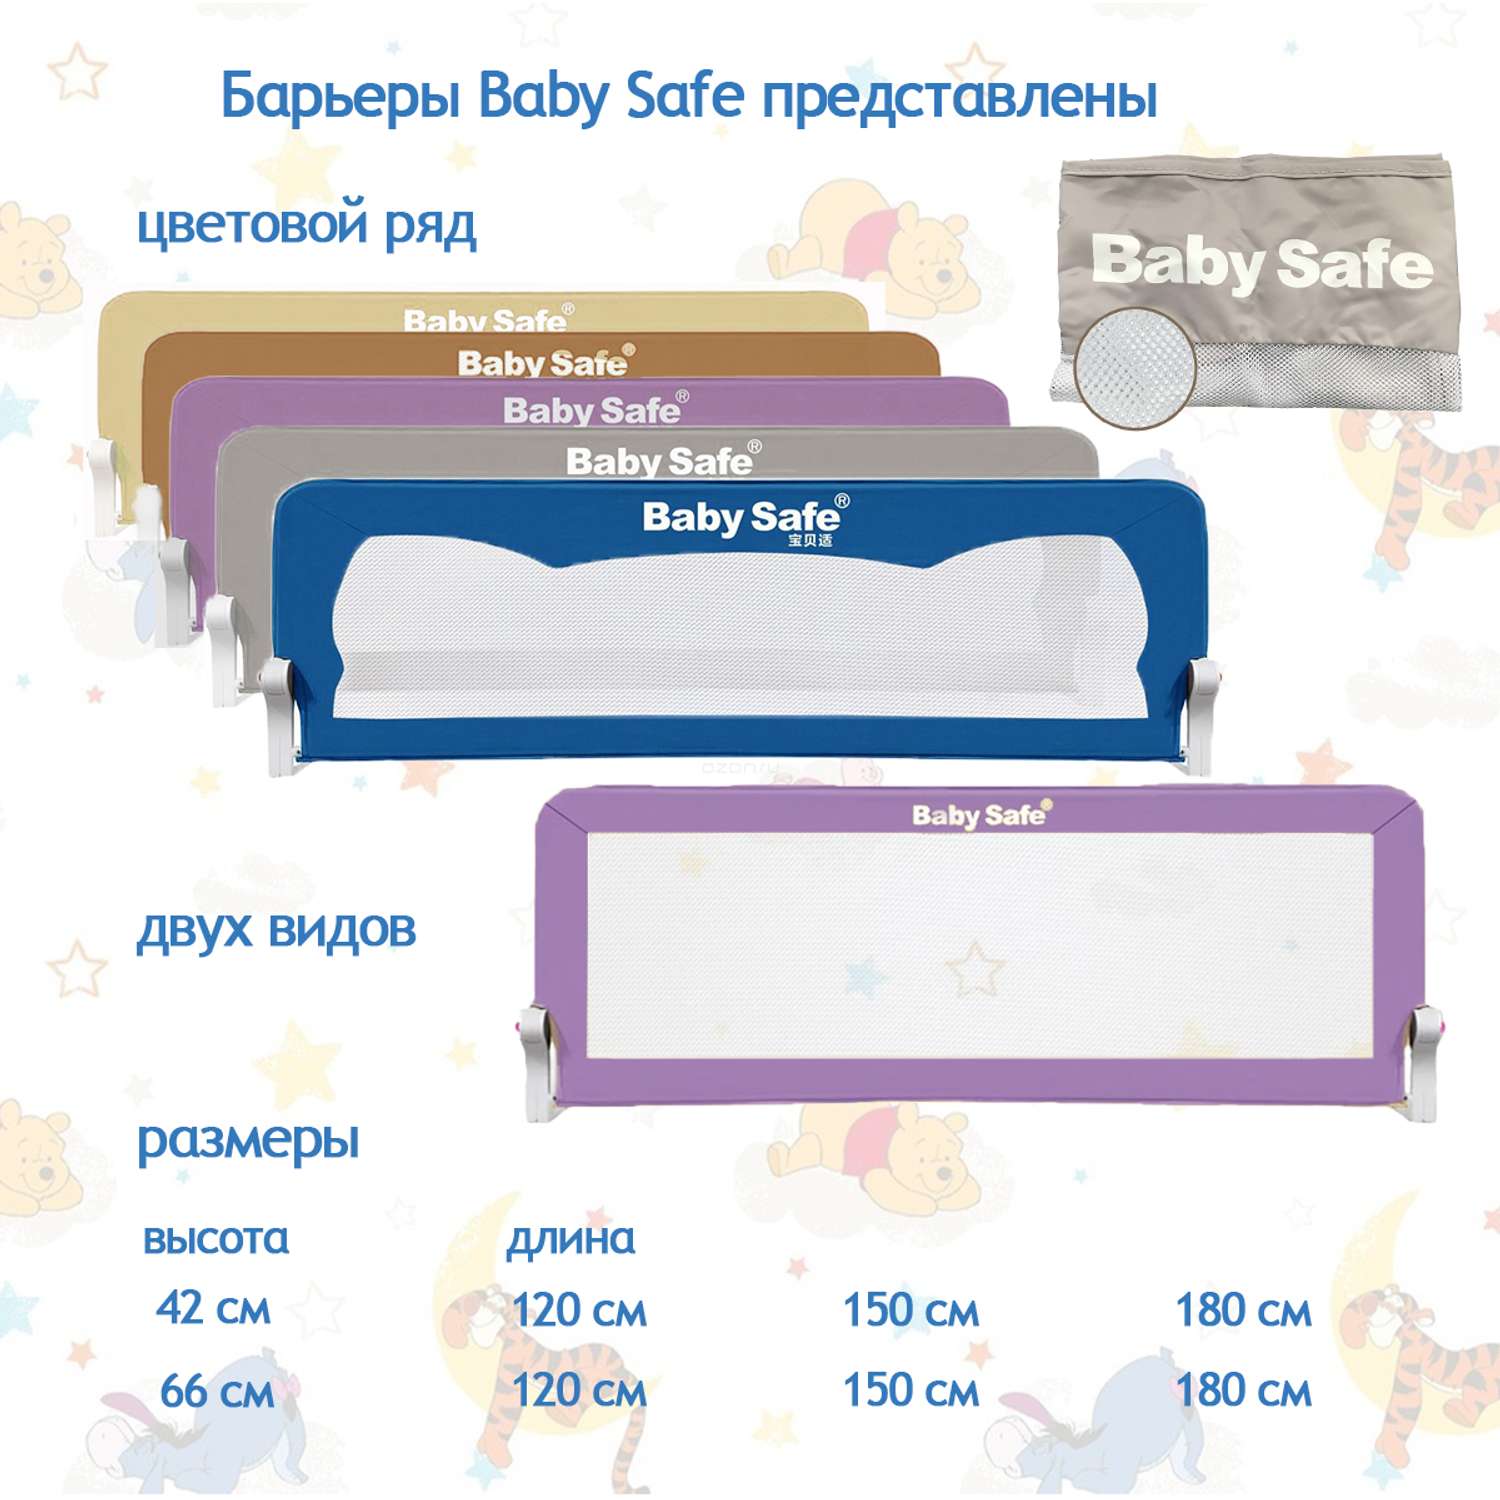 Барьер защитный для кровати Baby Safe защитный для кровати Ушки 180х66 серый - фото 7